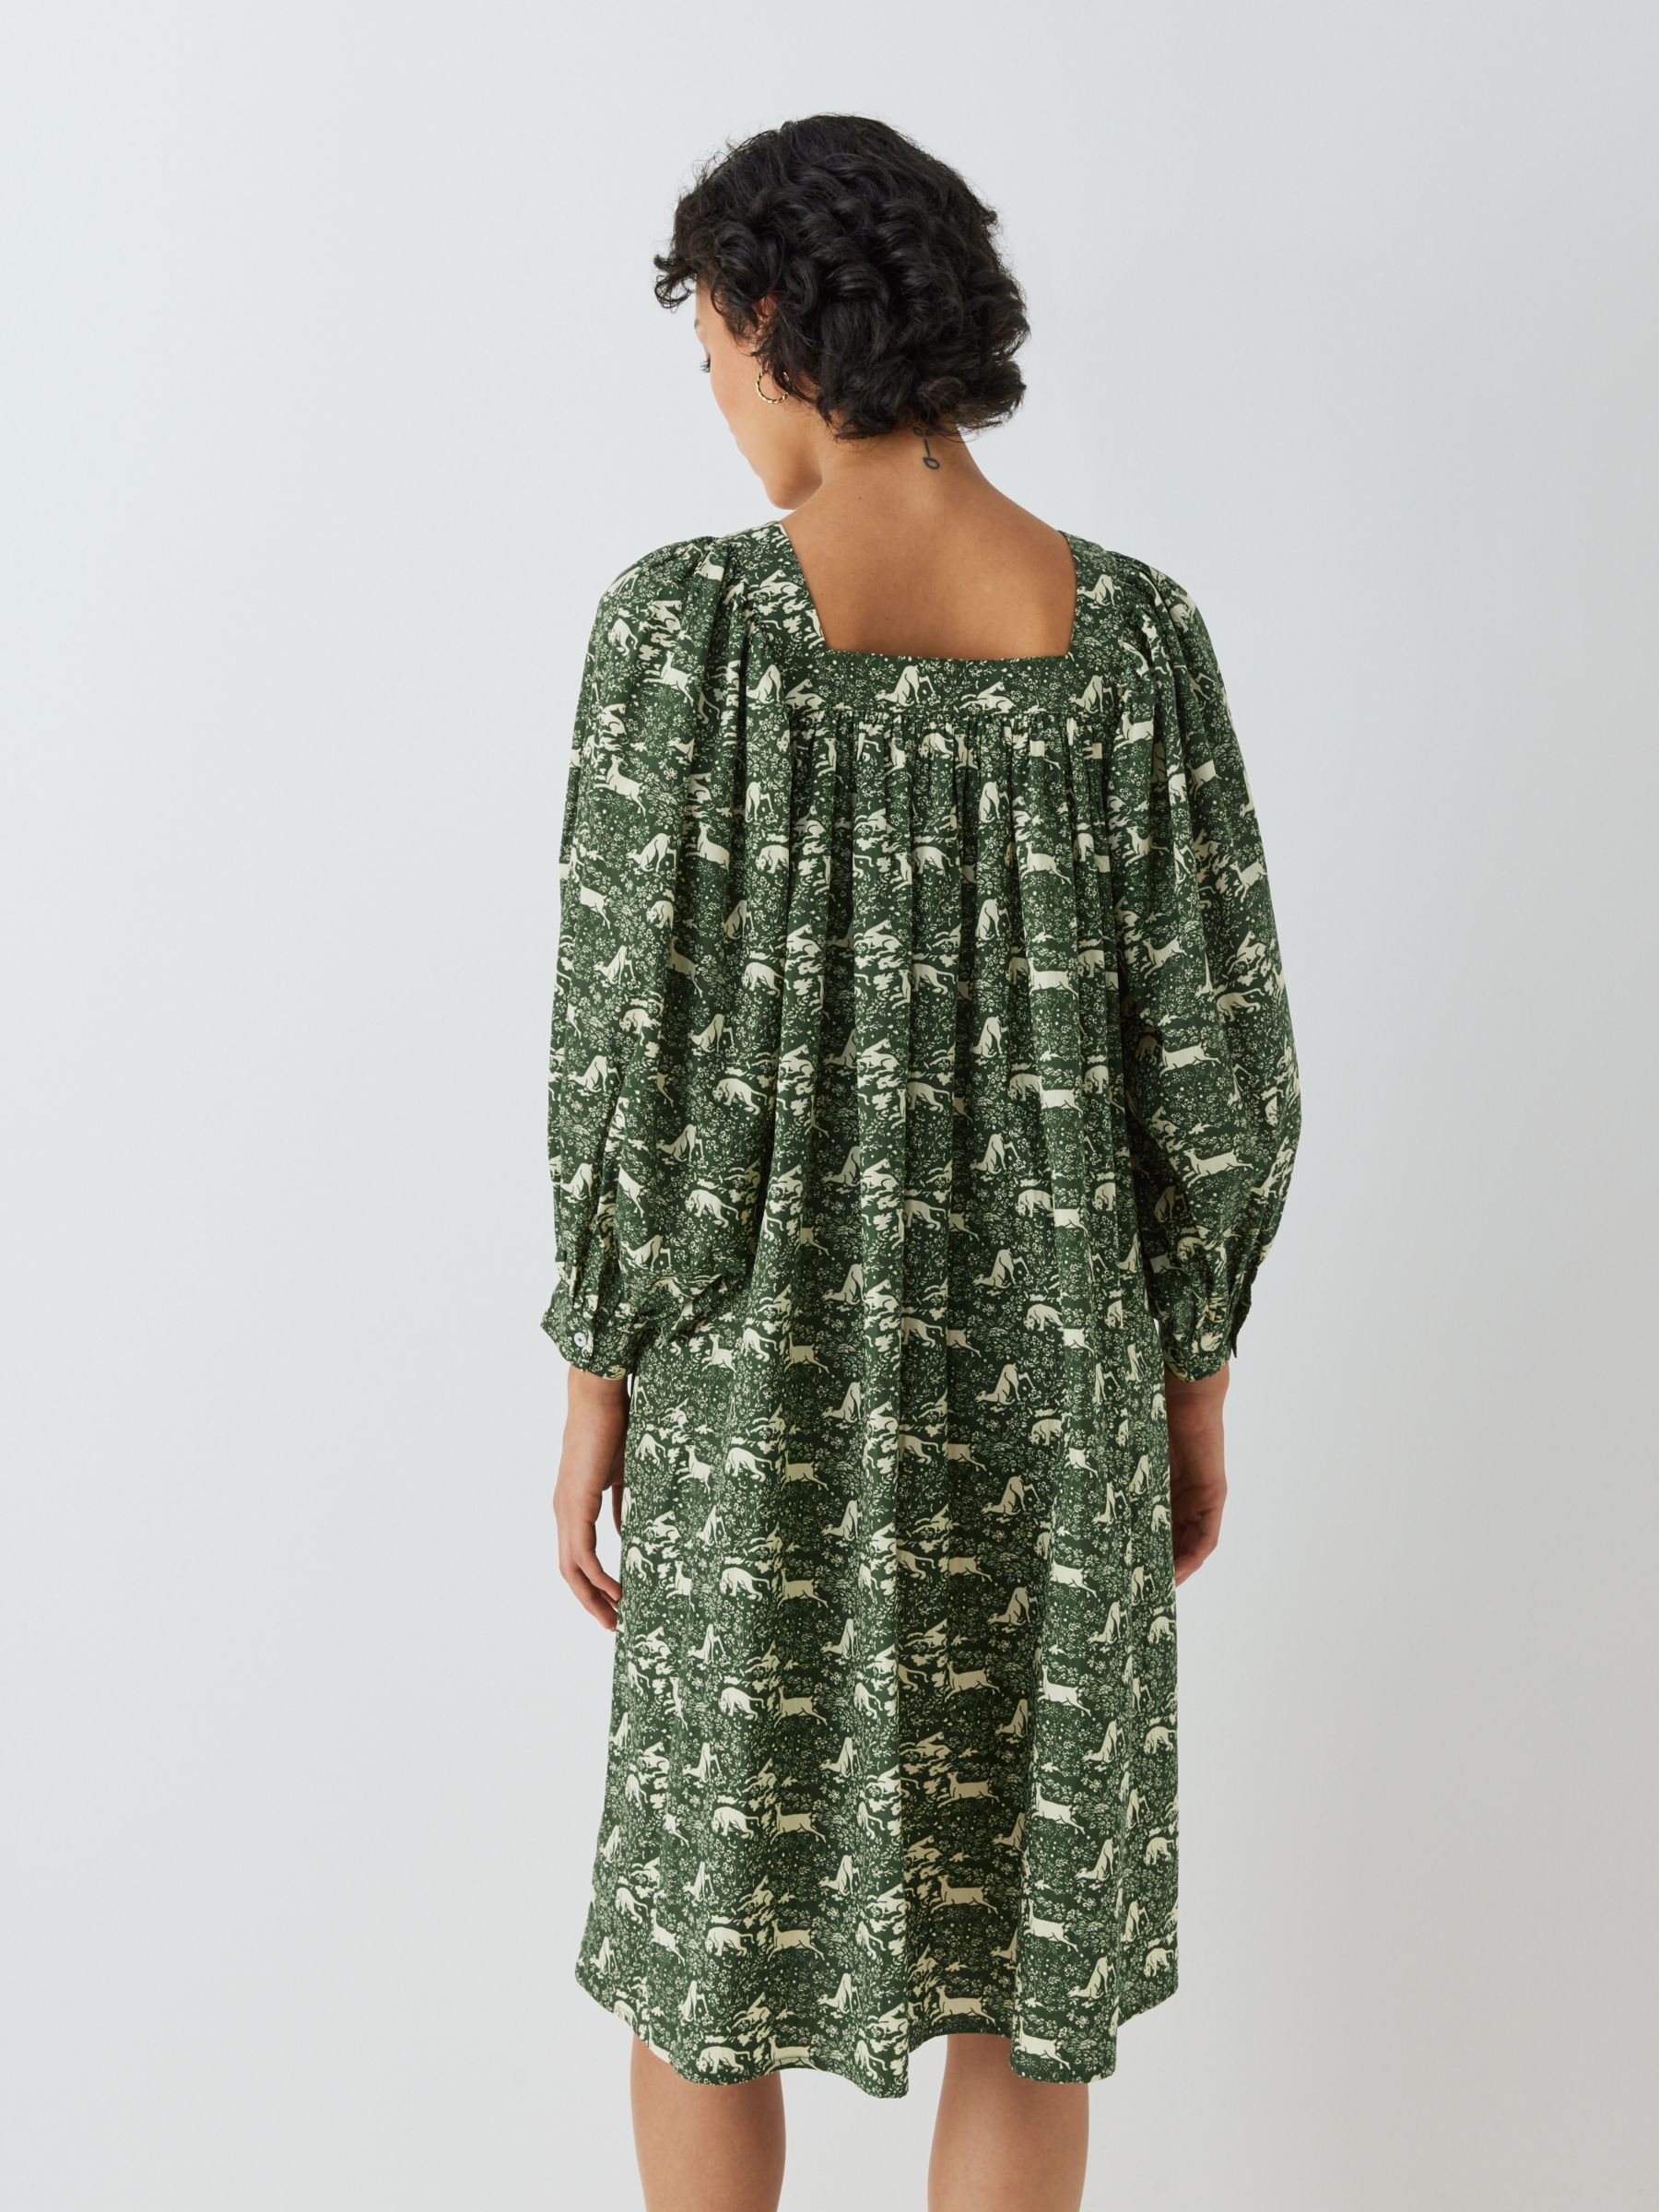 Batsheva x Laura Ashley Beamaris Abercastle Print Dress, Green/Multi, 8